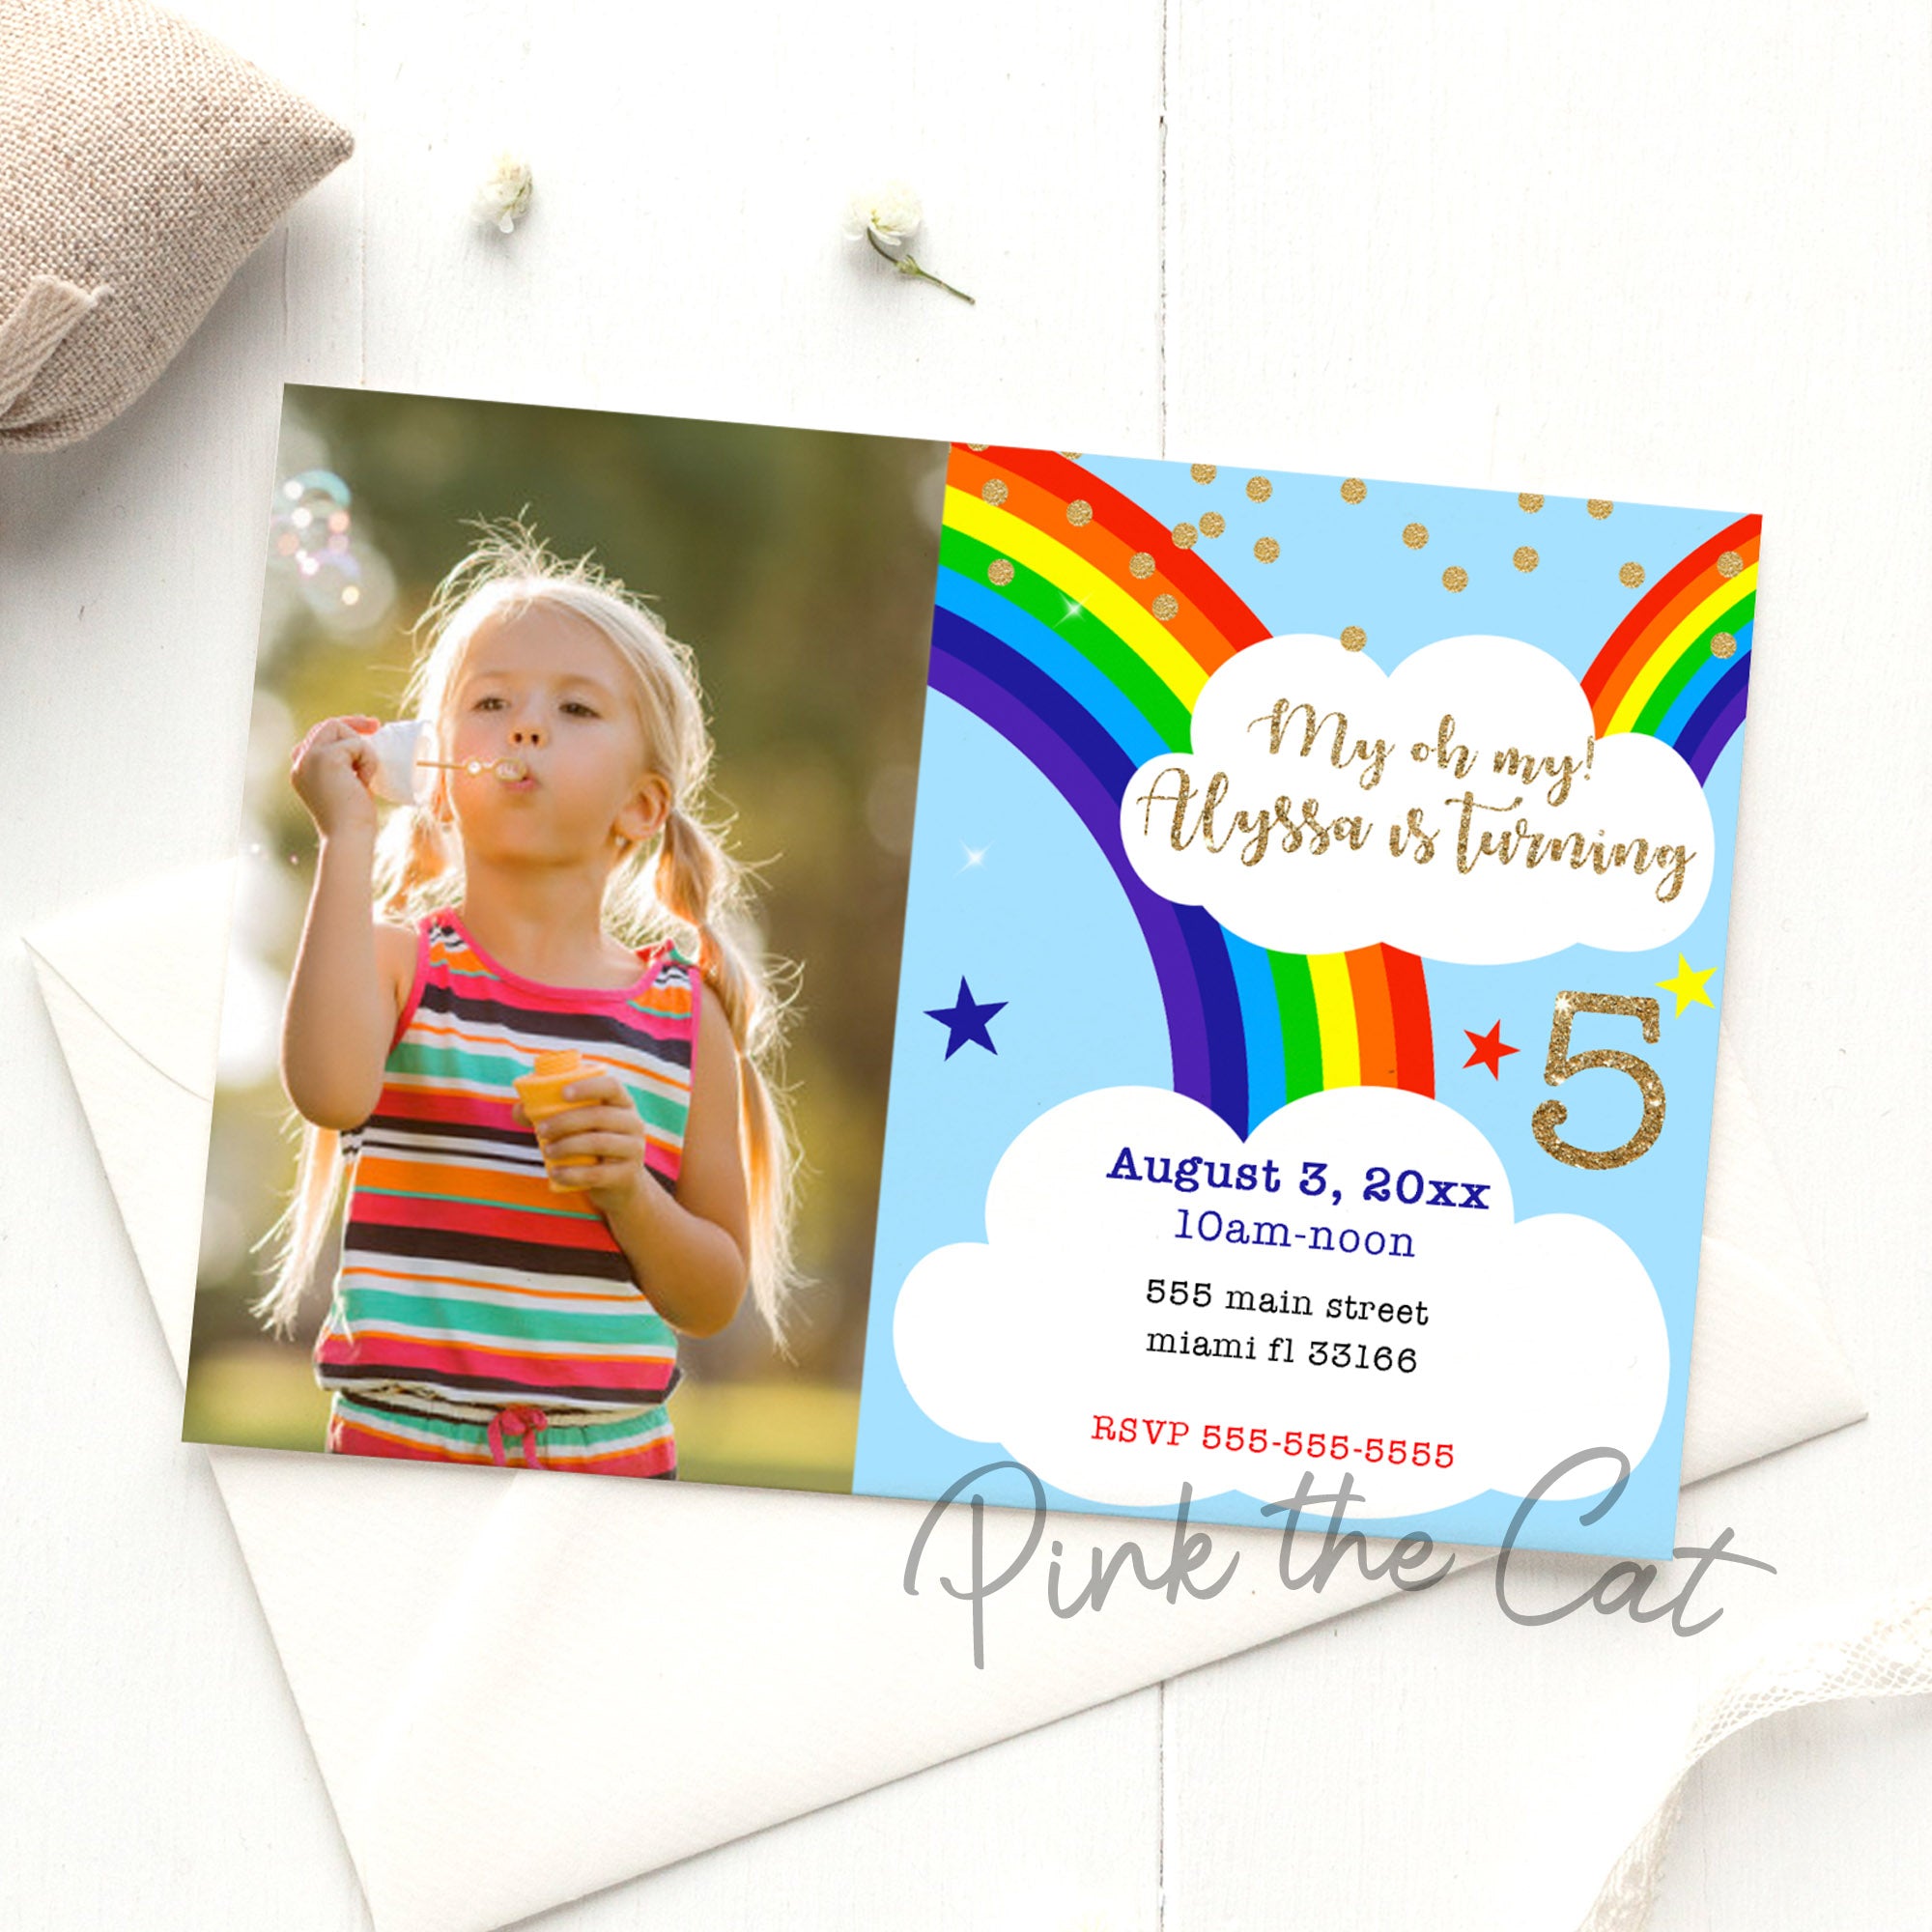 Rainbow invitation with photo